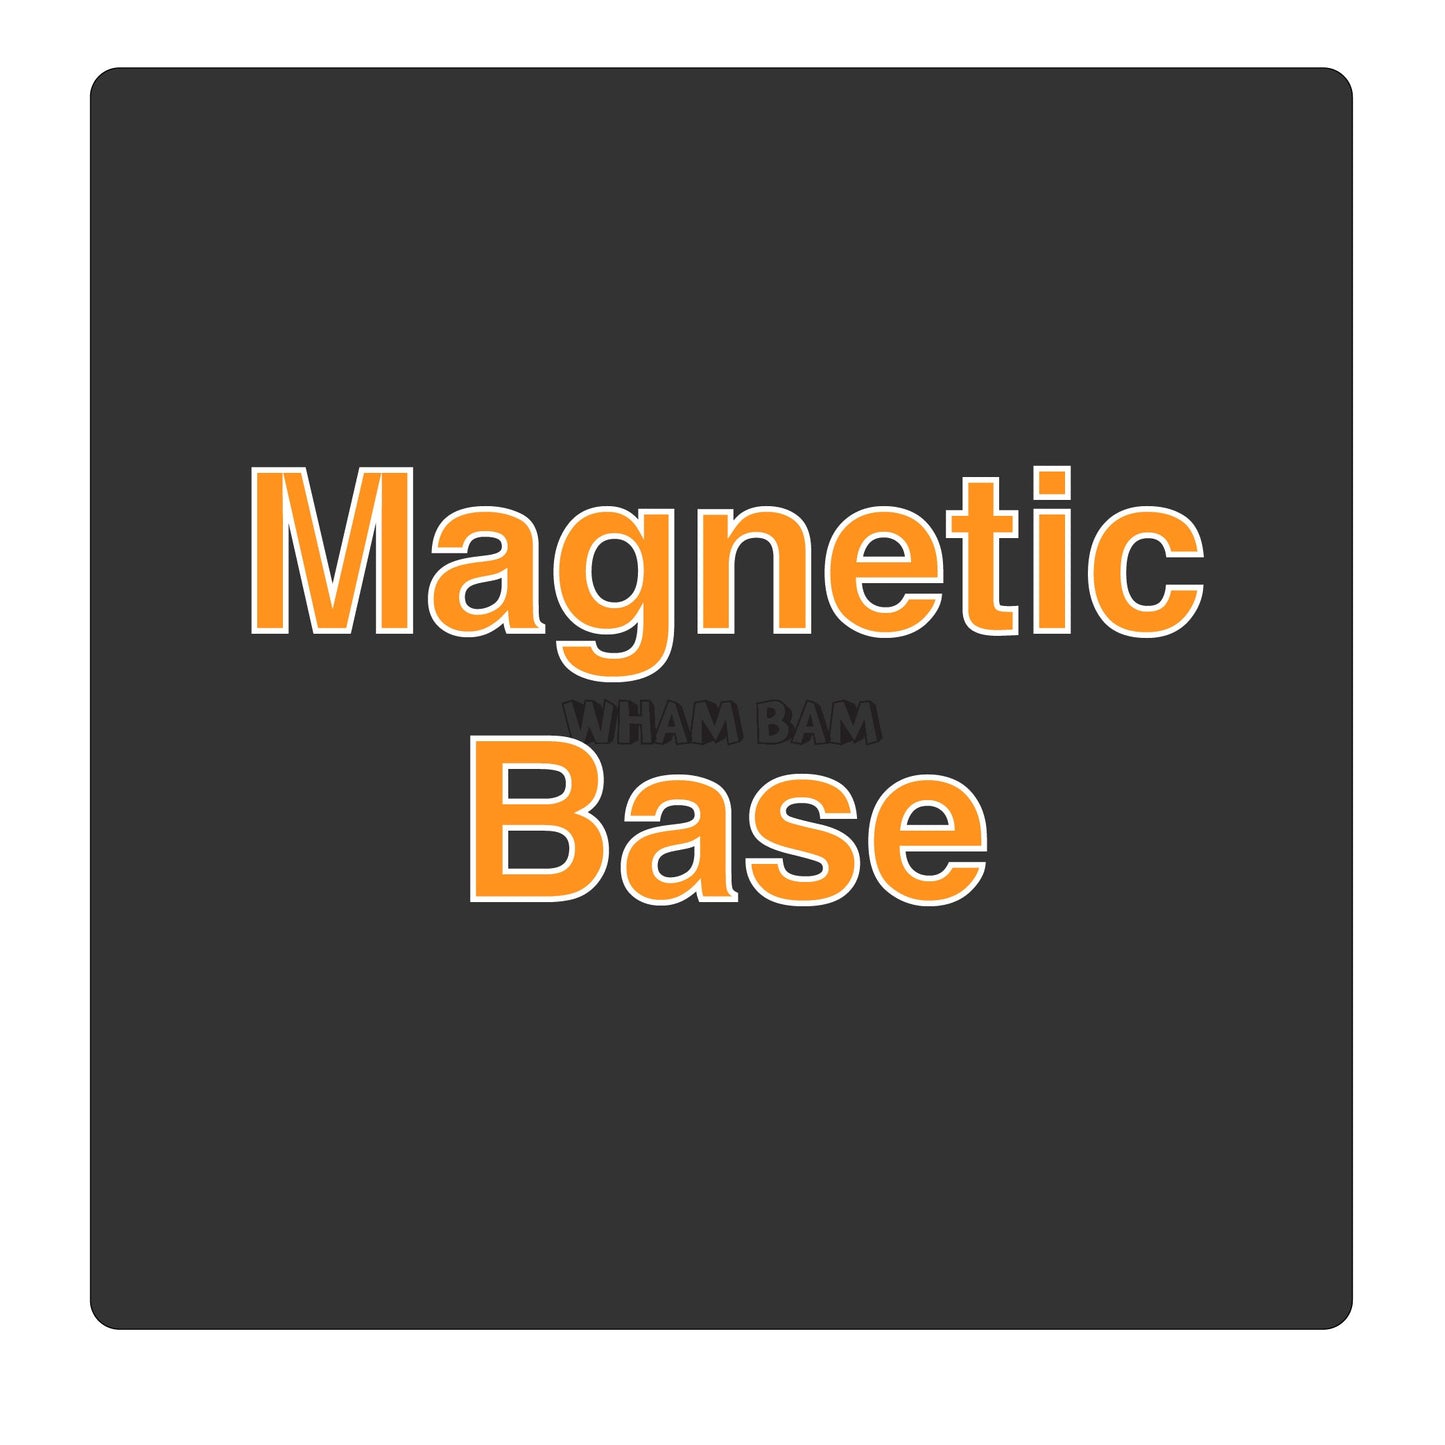 Magnetic Base - 510 x 510 - Creality CR-10 S5